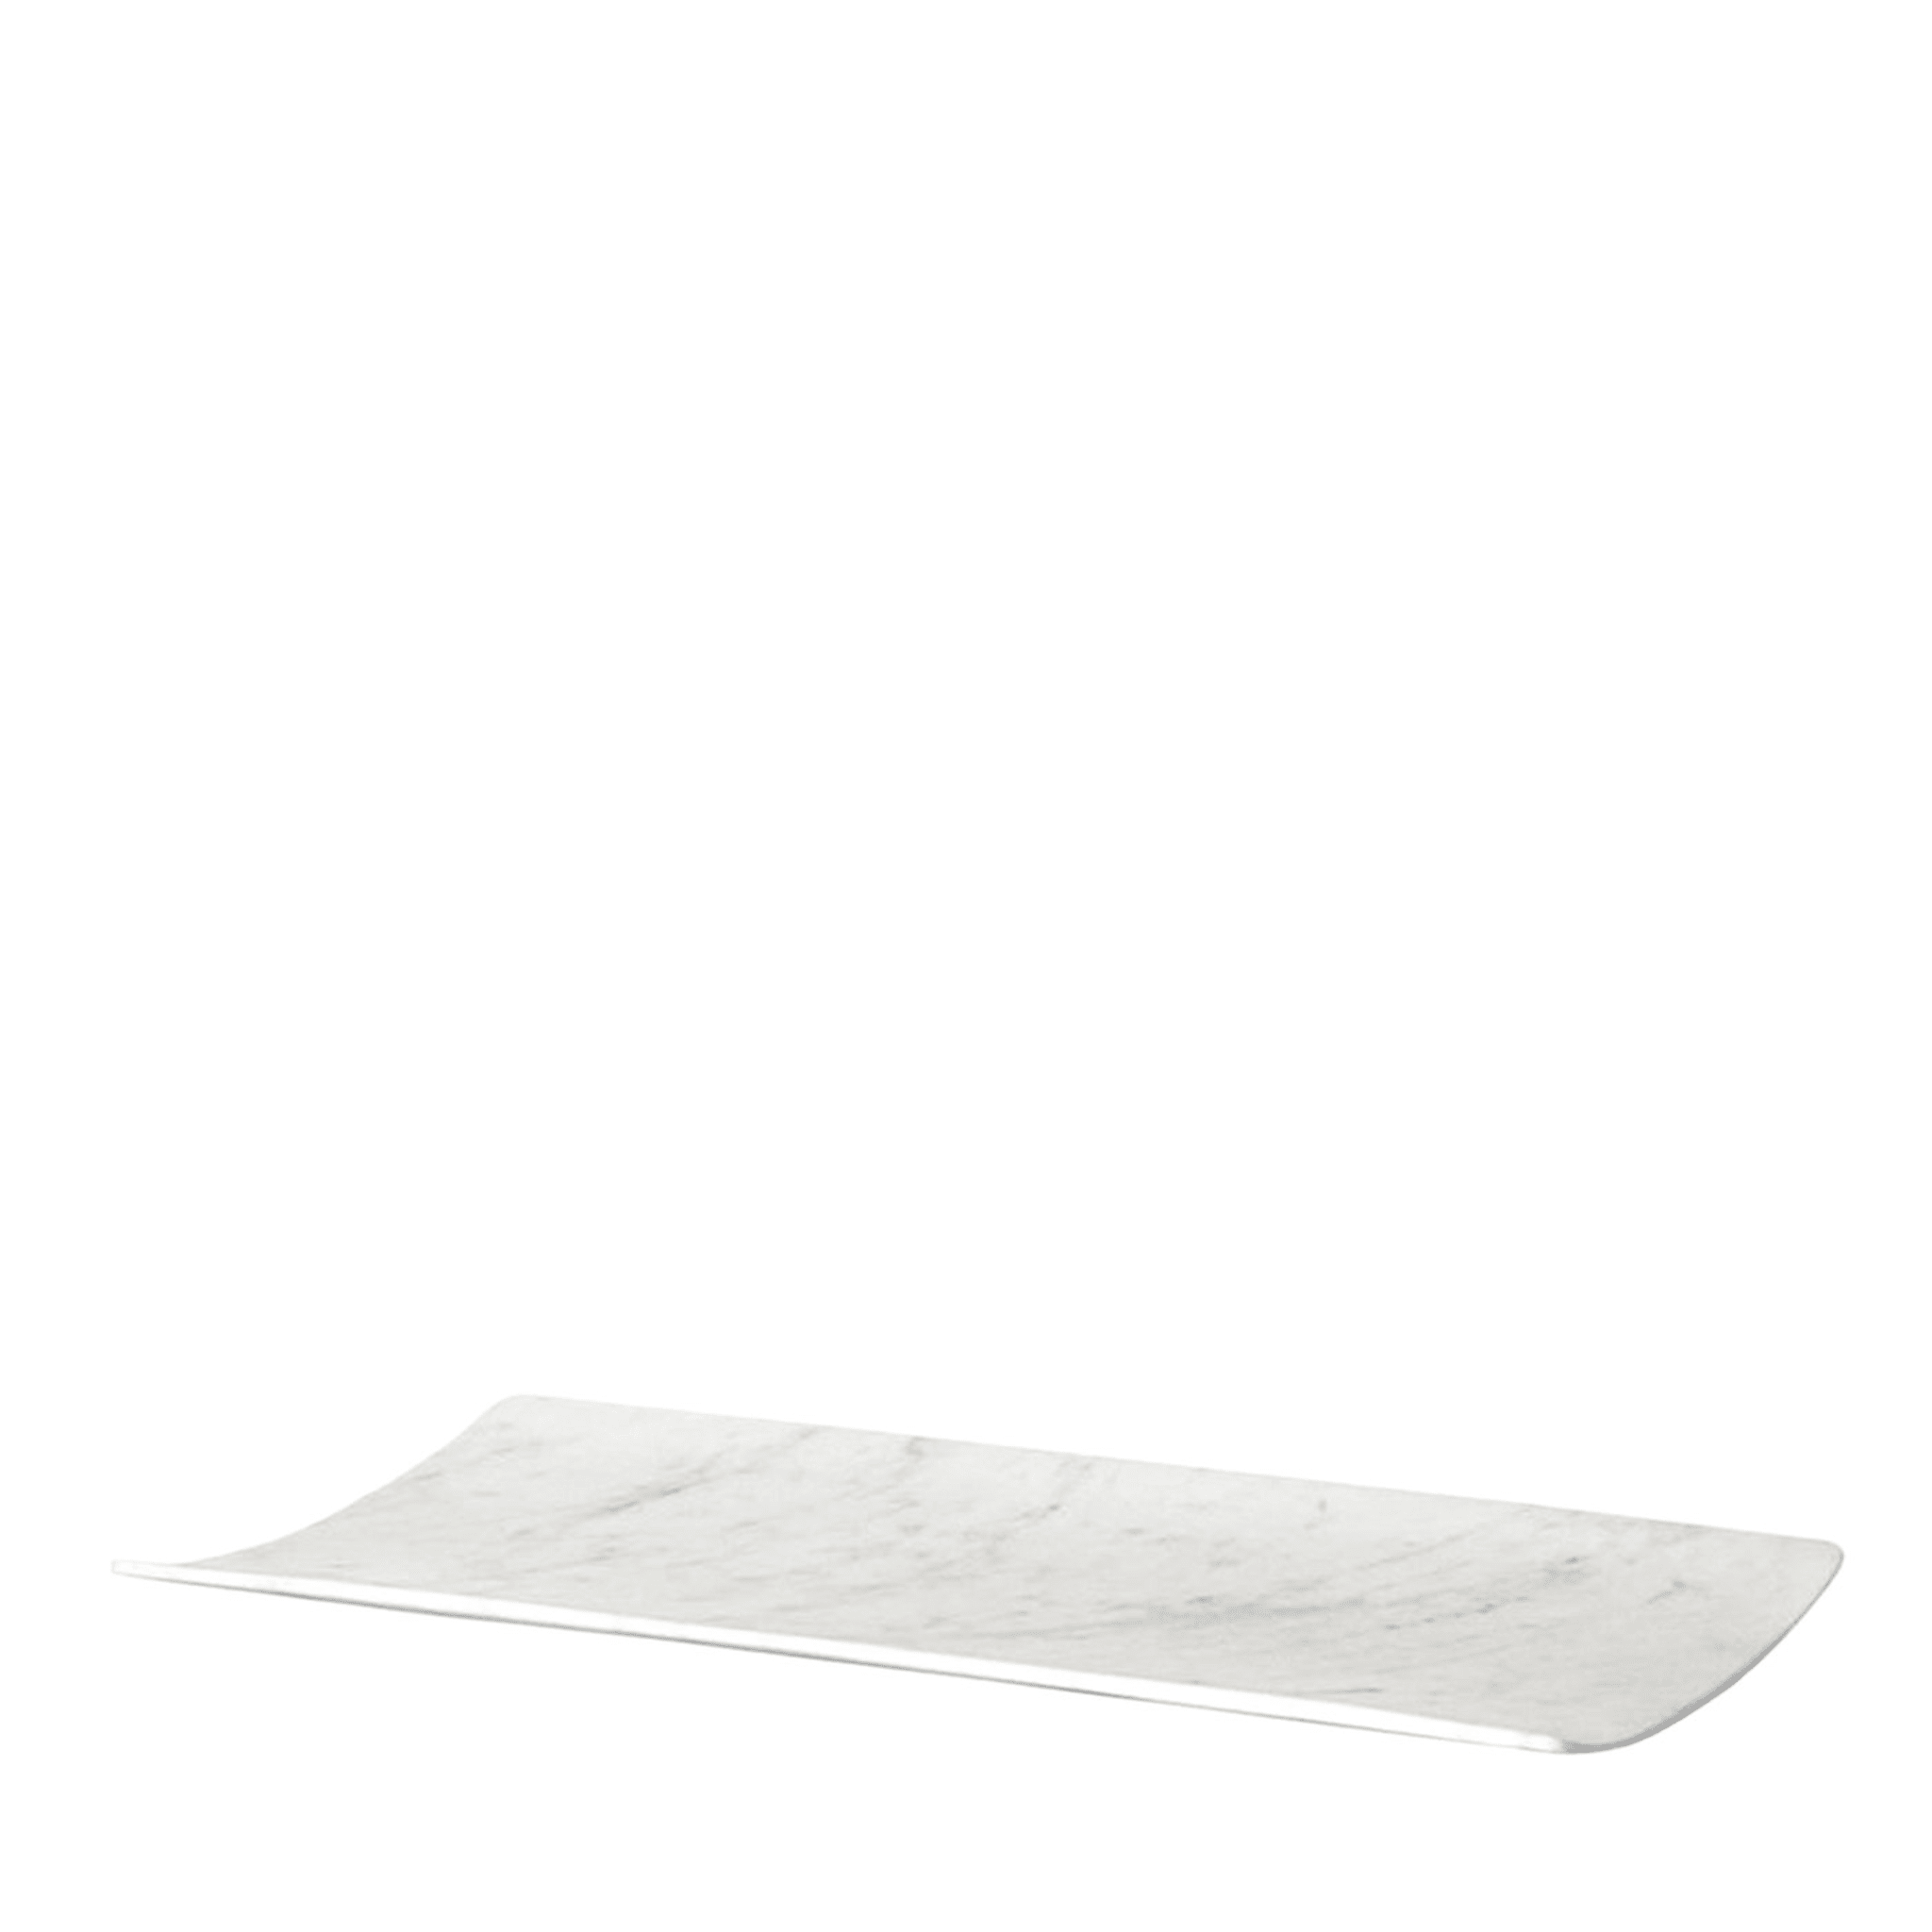 Curvati Large White Carrara Tray by Studioformart - Main view